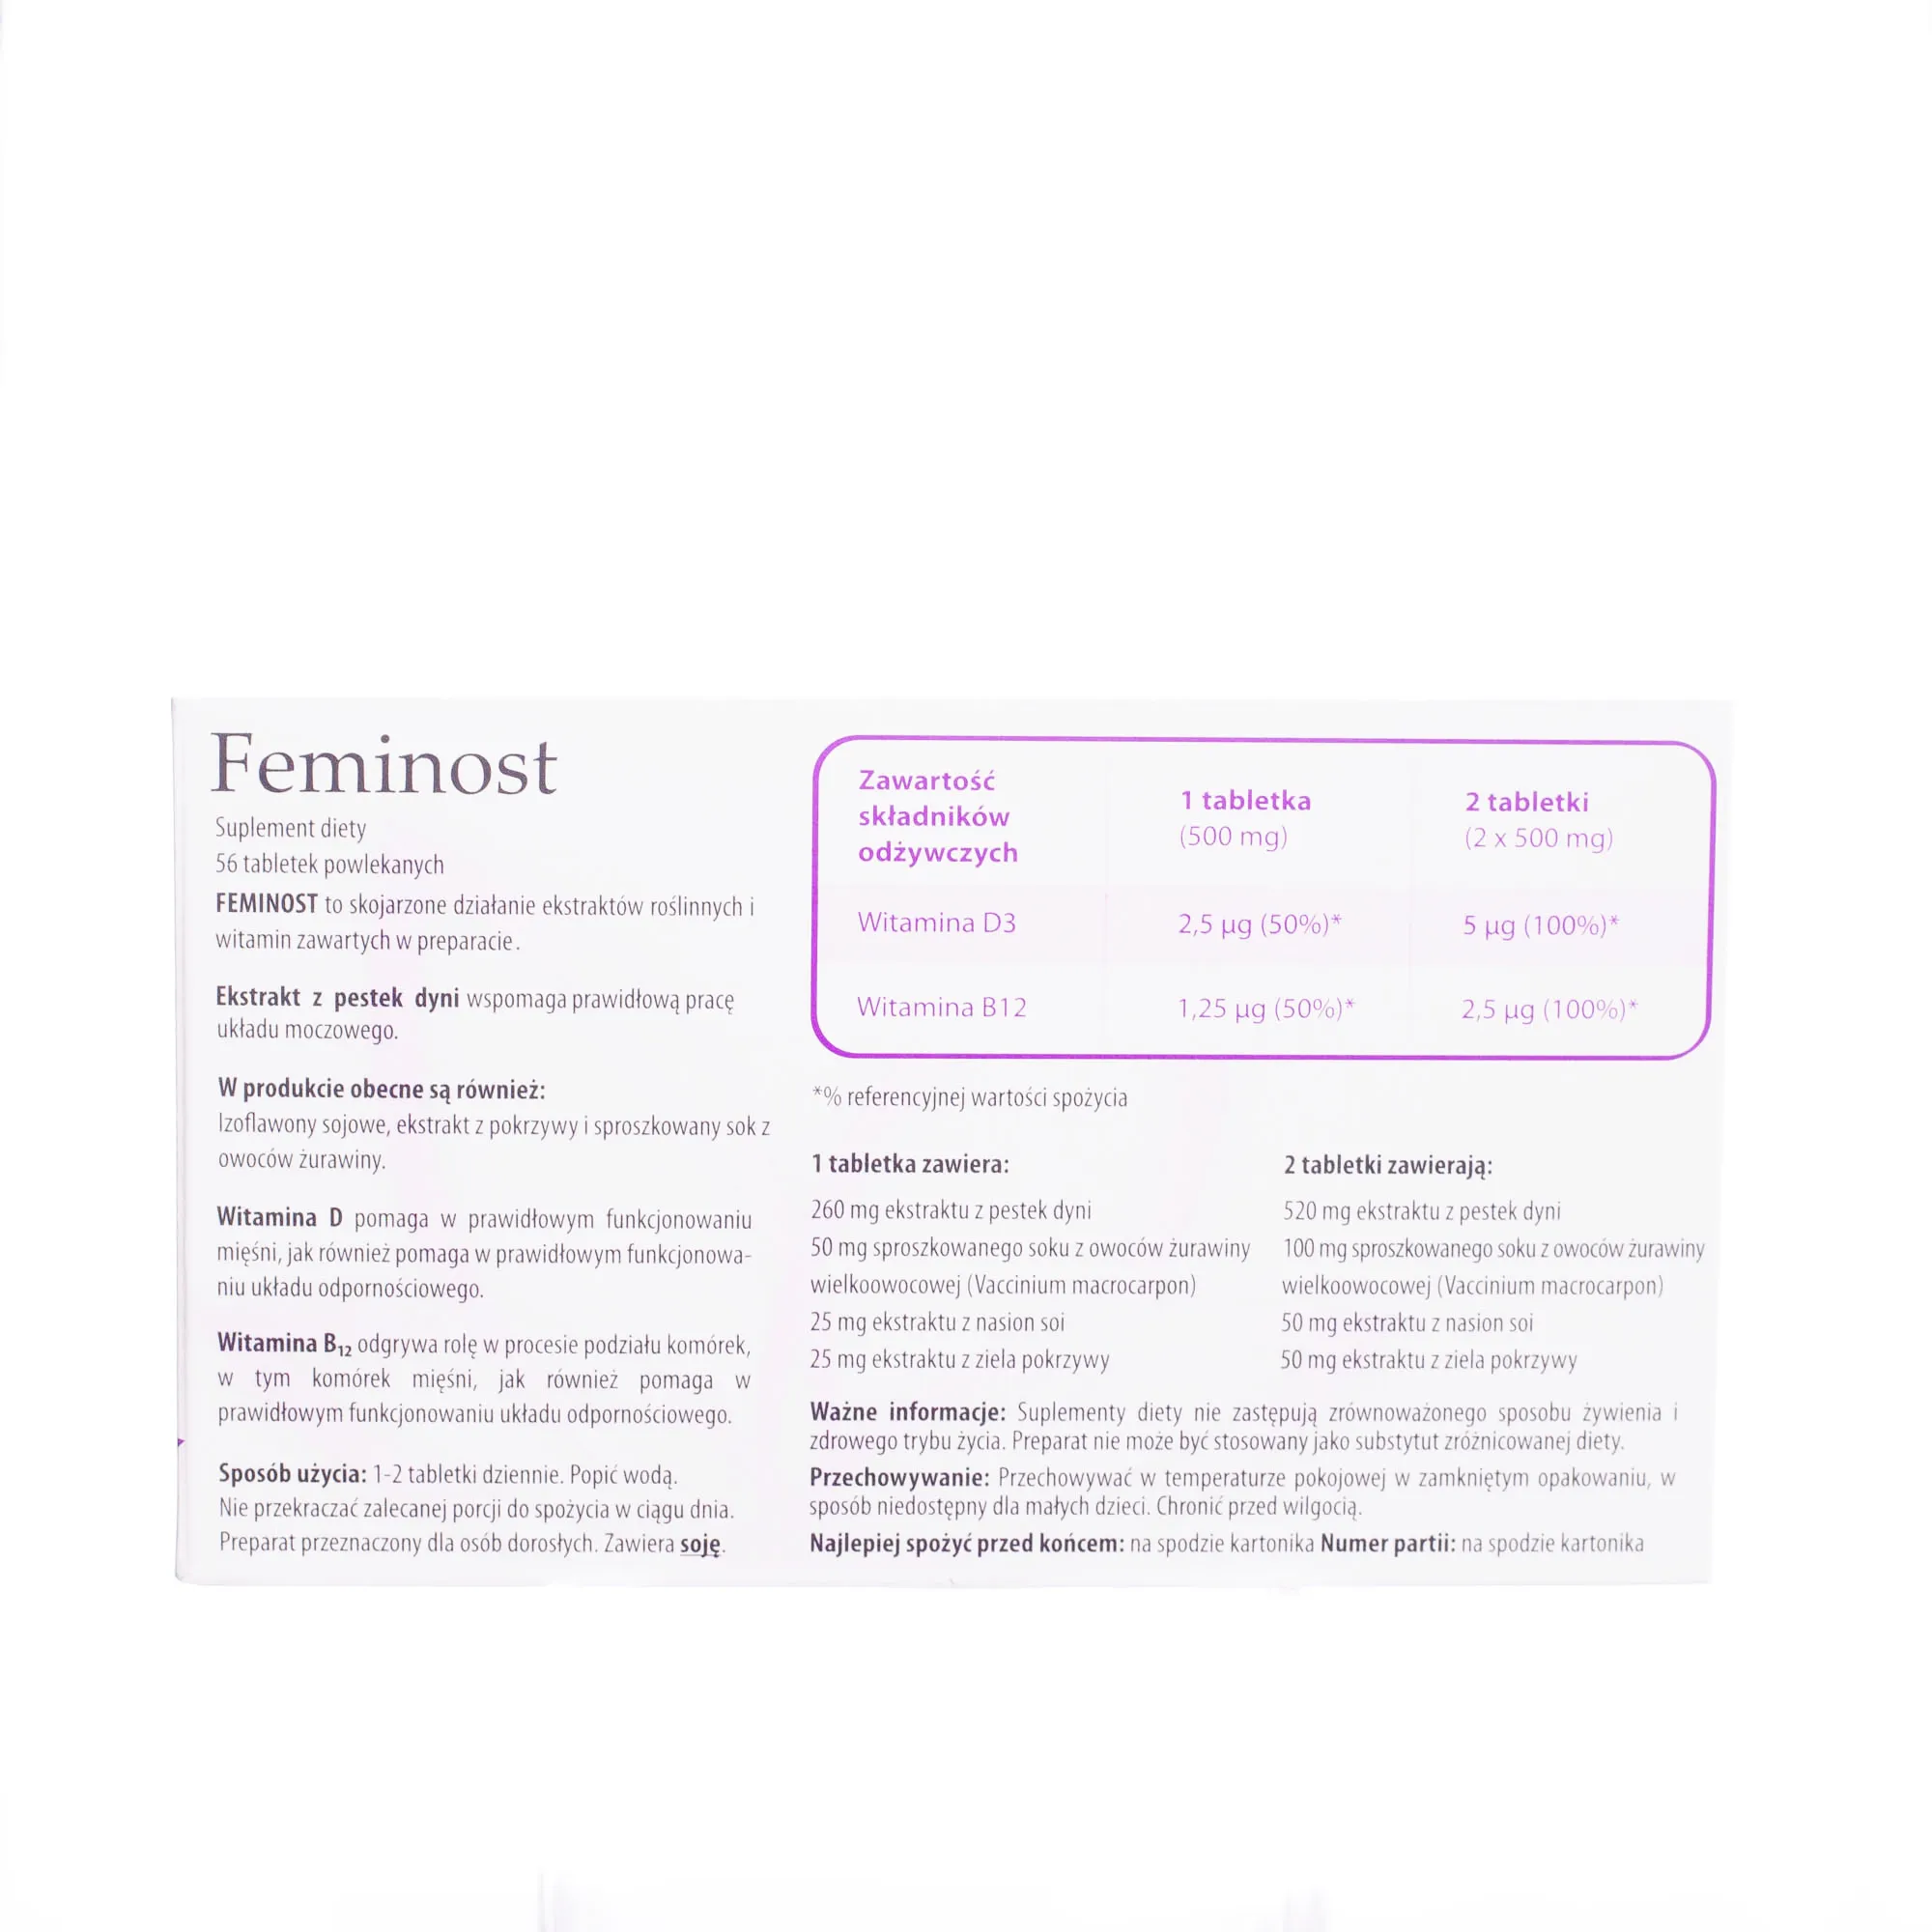 Feminost - suplement diety dla kobiet, 56 tabletek powlekanych 